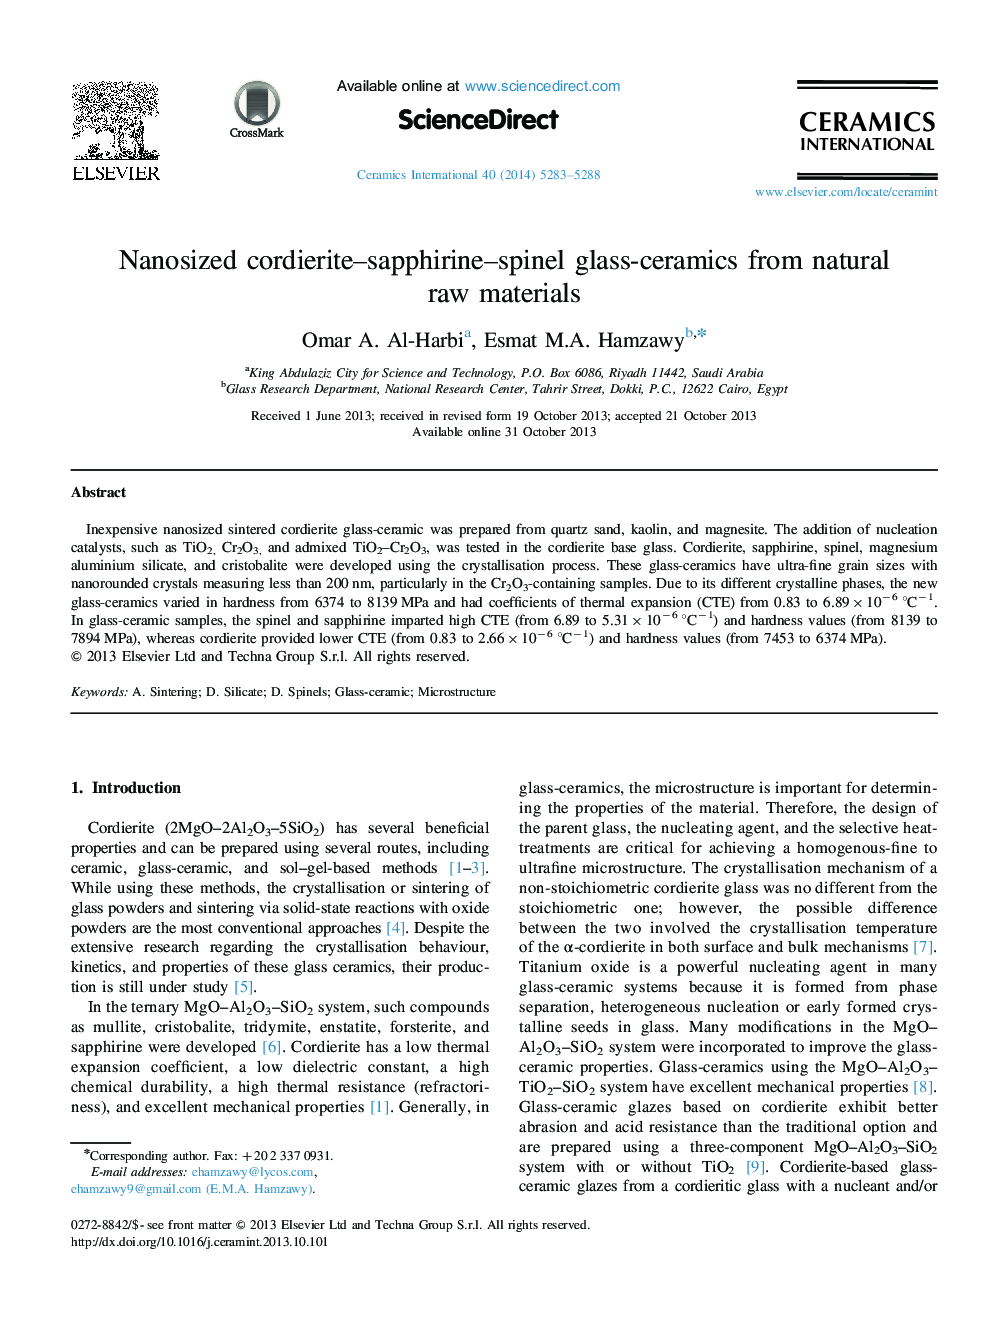 Nanosized cordierite-sapphirine-spinel glass-ceramics from natural raw materials